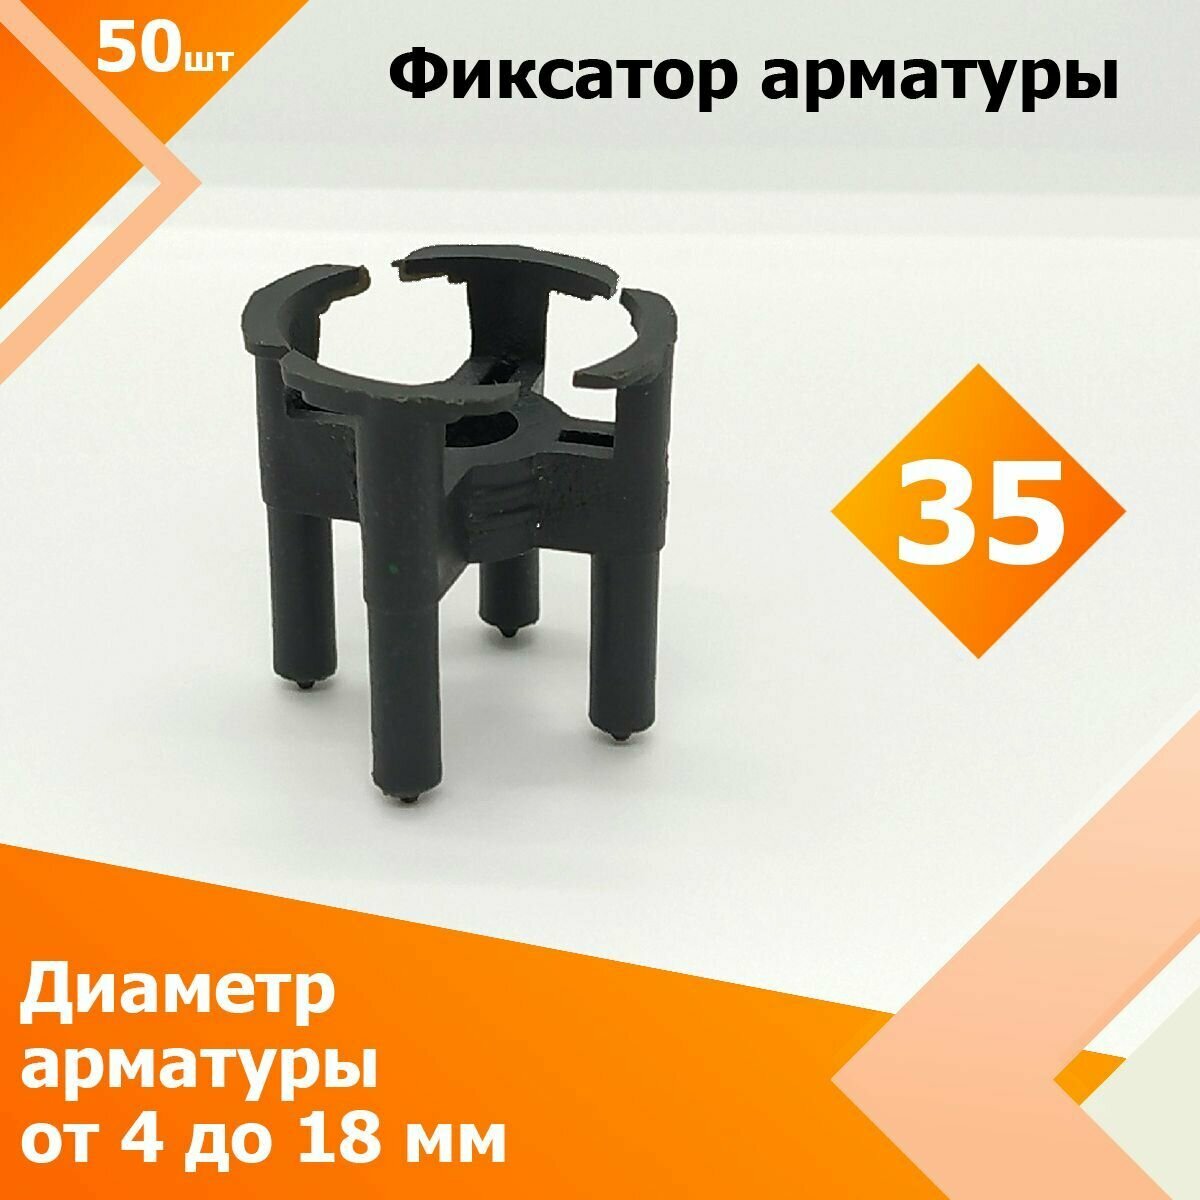 Фиксатор арматуры "Стульчик" 35 мм (50 шт.) (Диаметр арматуры от 4 до 18 мм)